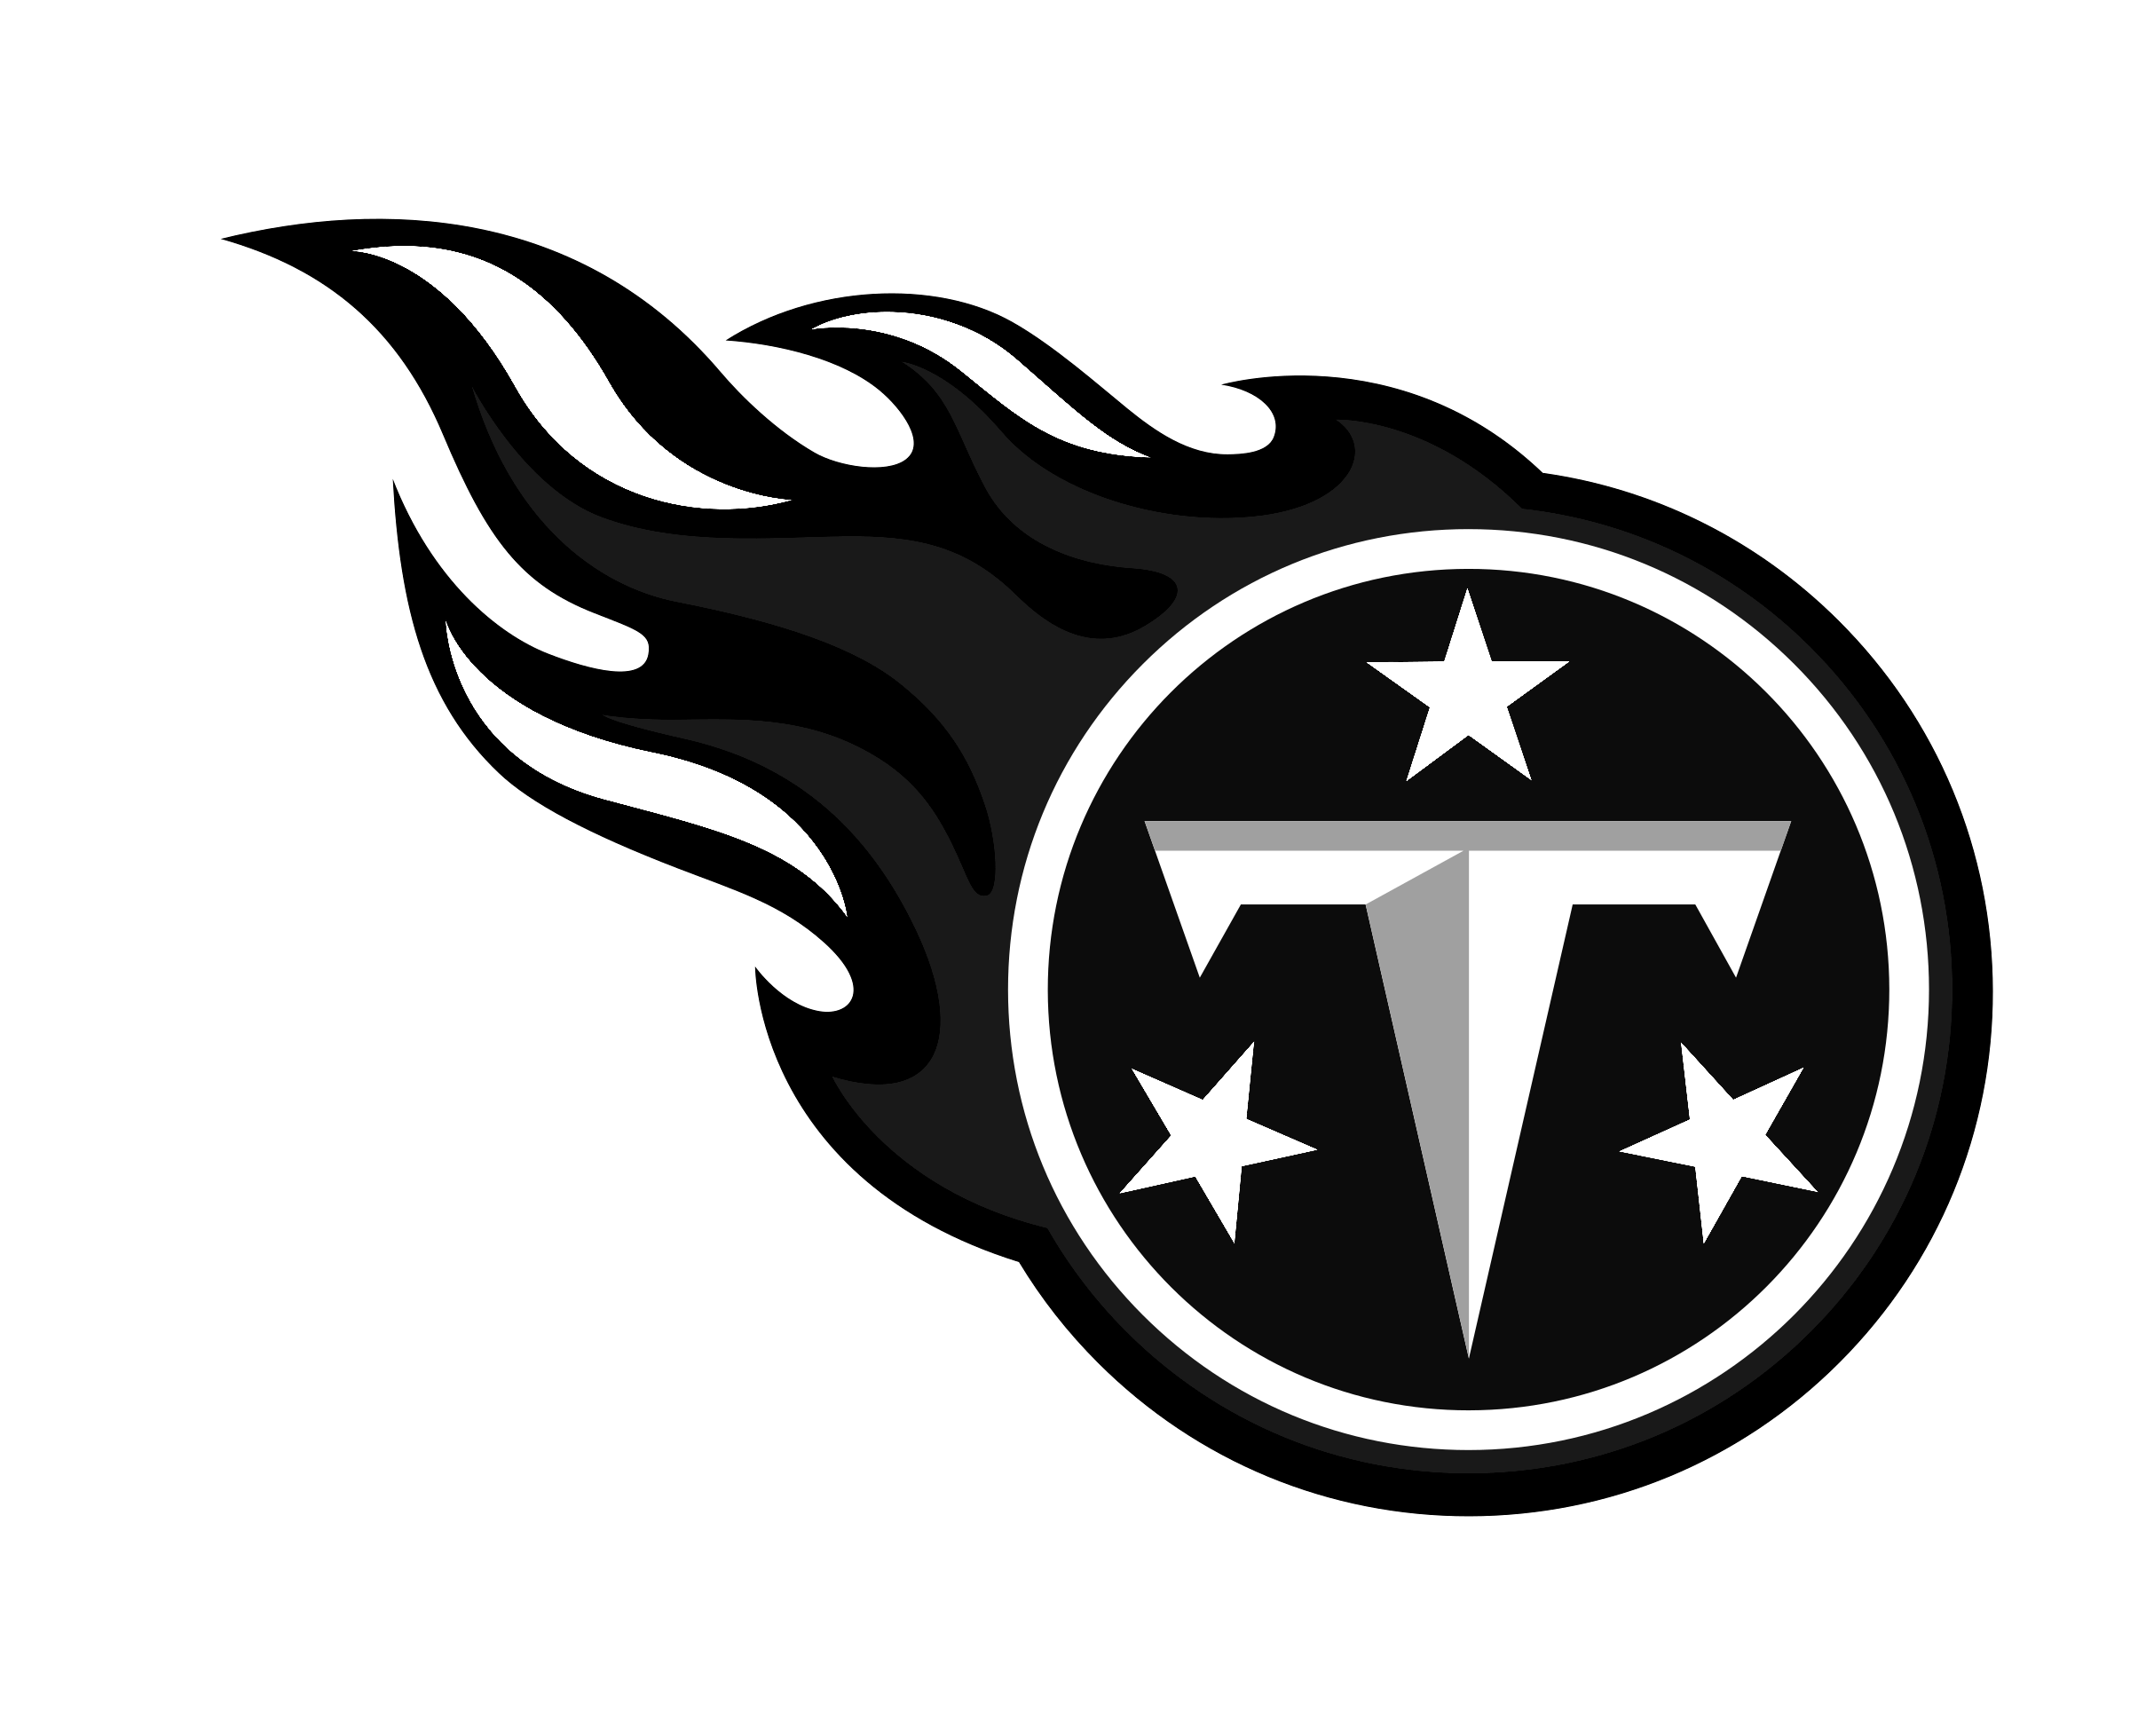 Tennessee Titans Logo - Tennessee Titans Logo PNG Transparent & SVG Vector - Freebie Supply